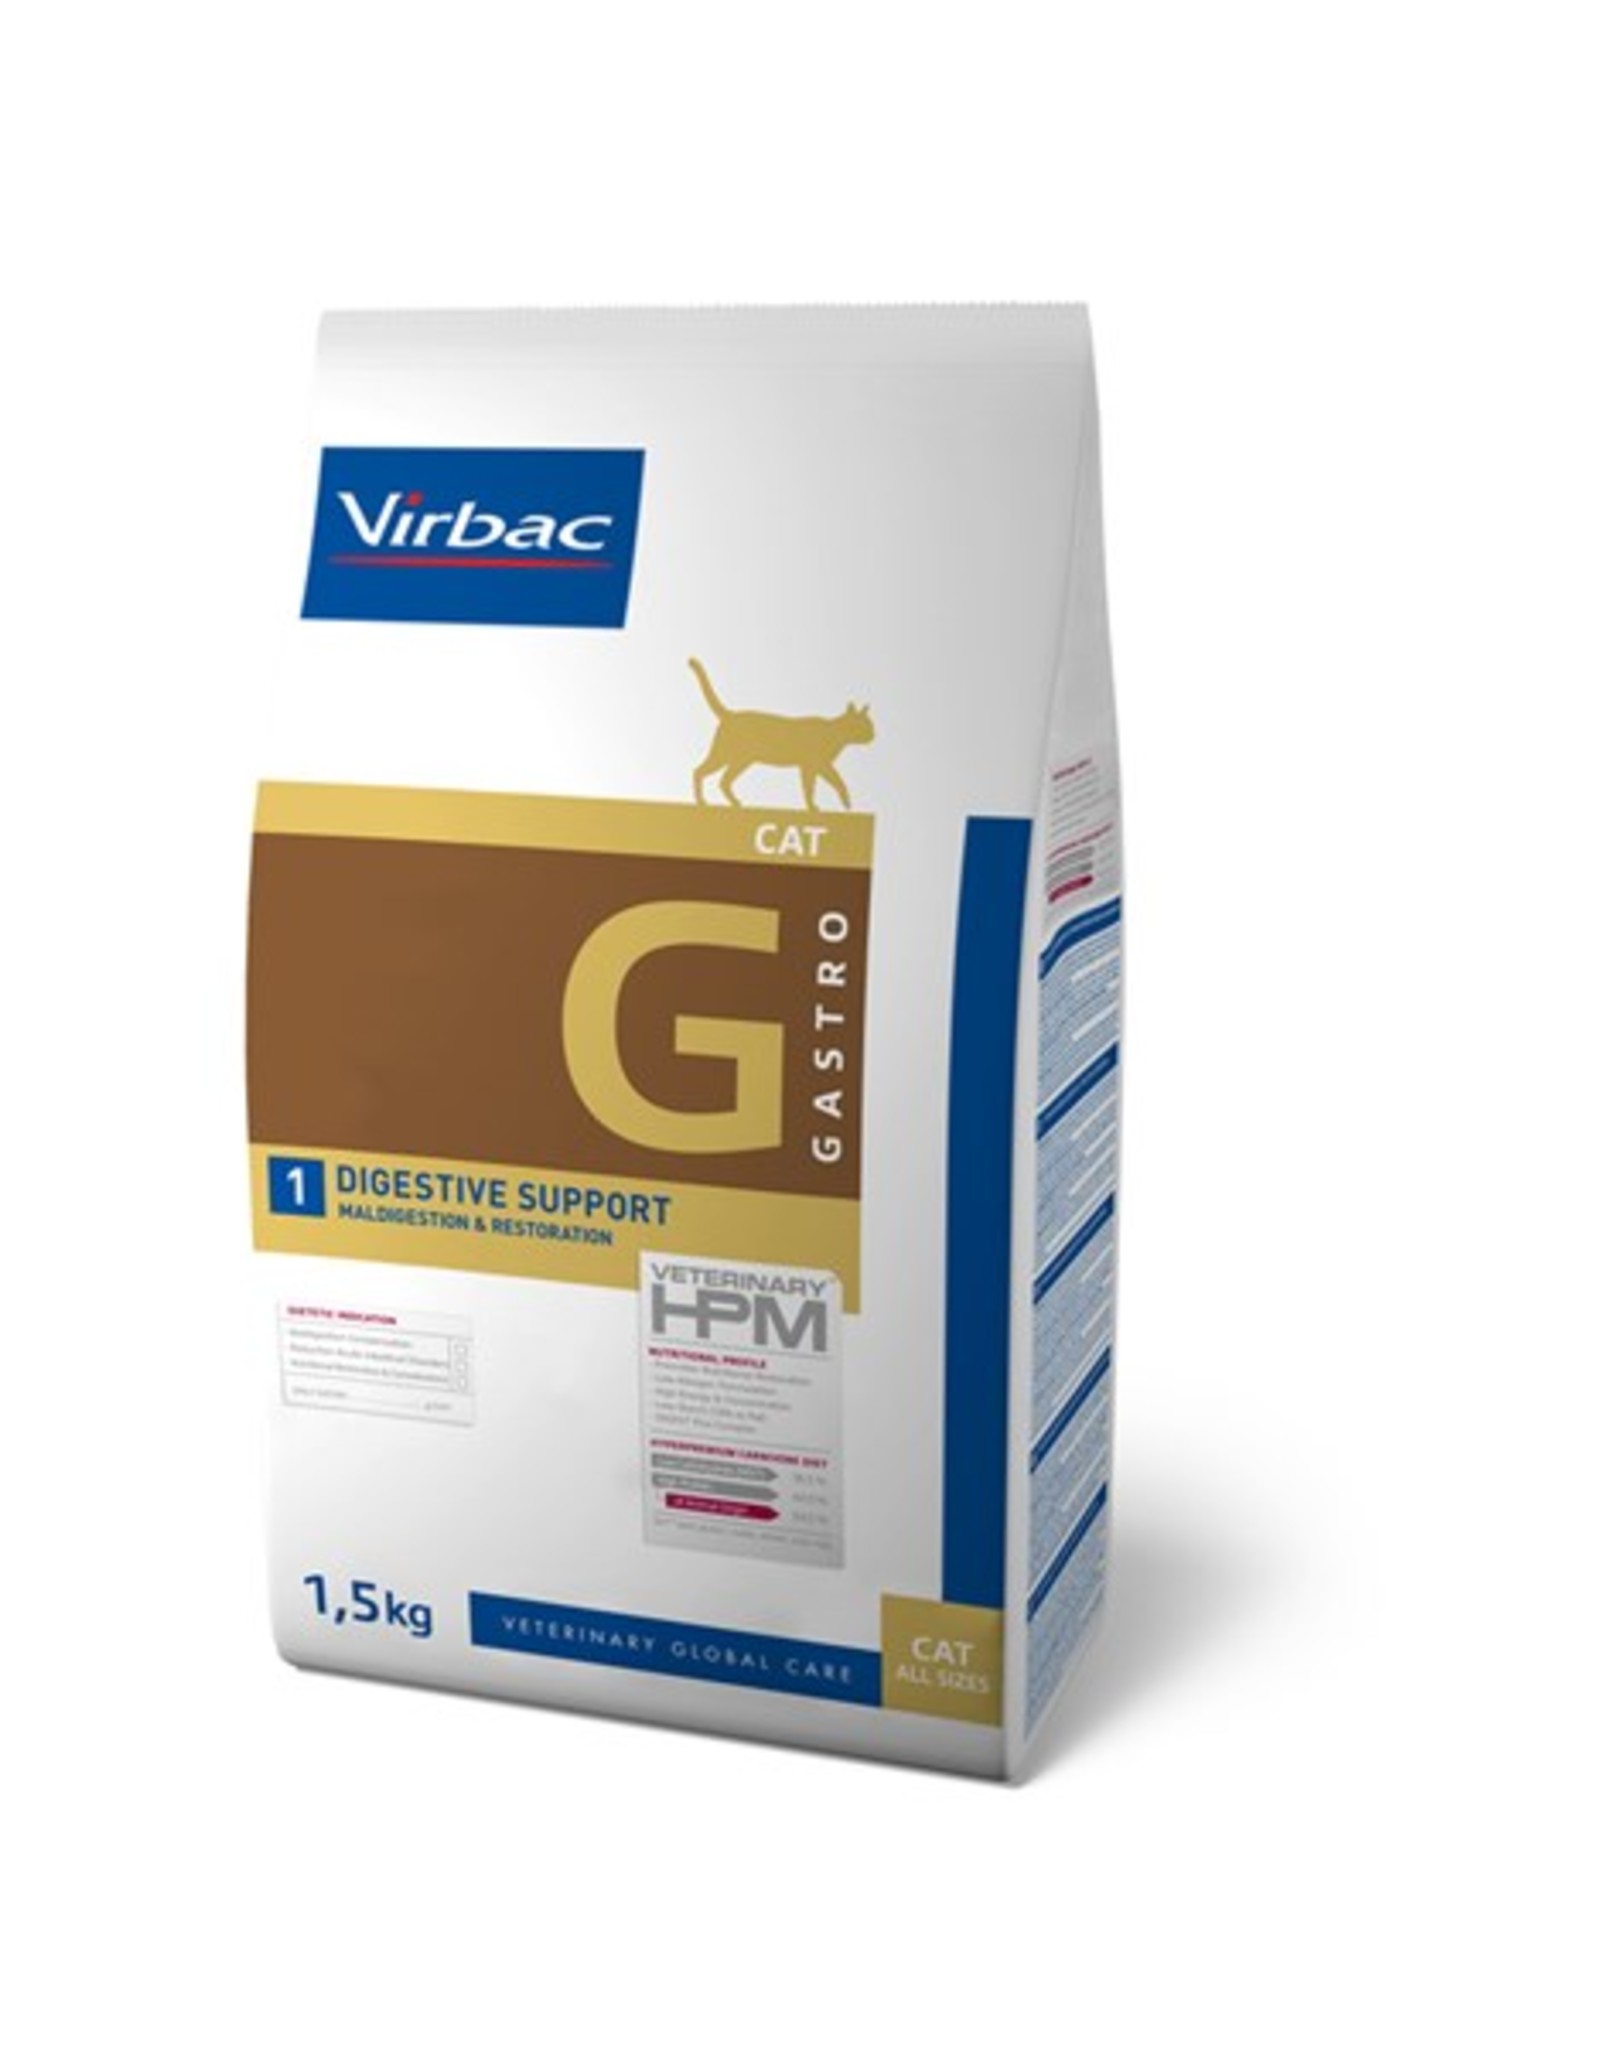 Virbac Virbac Hpm Katze Digestive Support G1 3kg